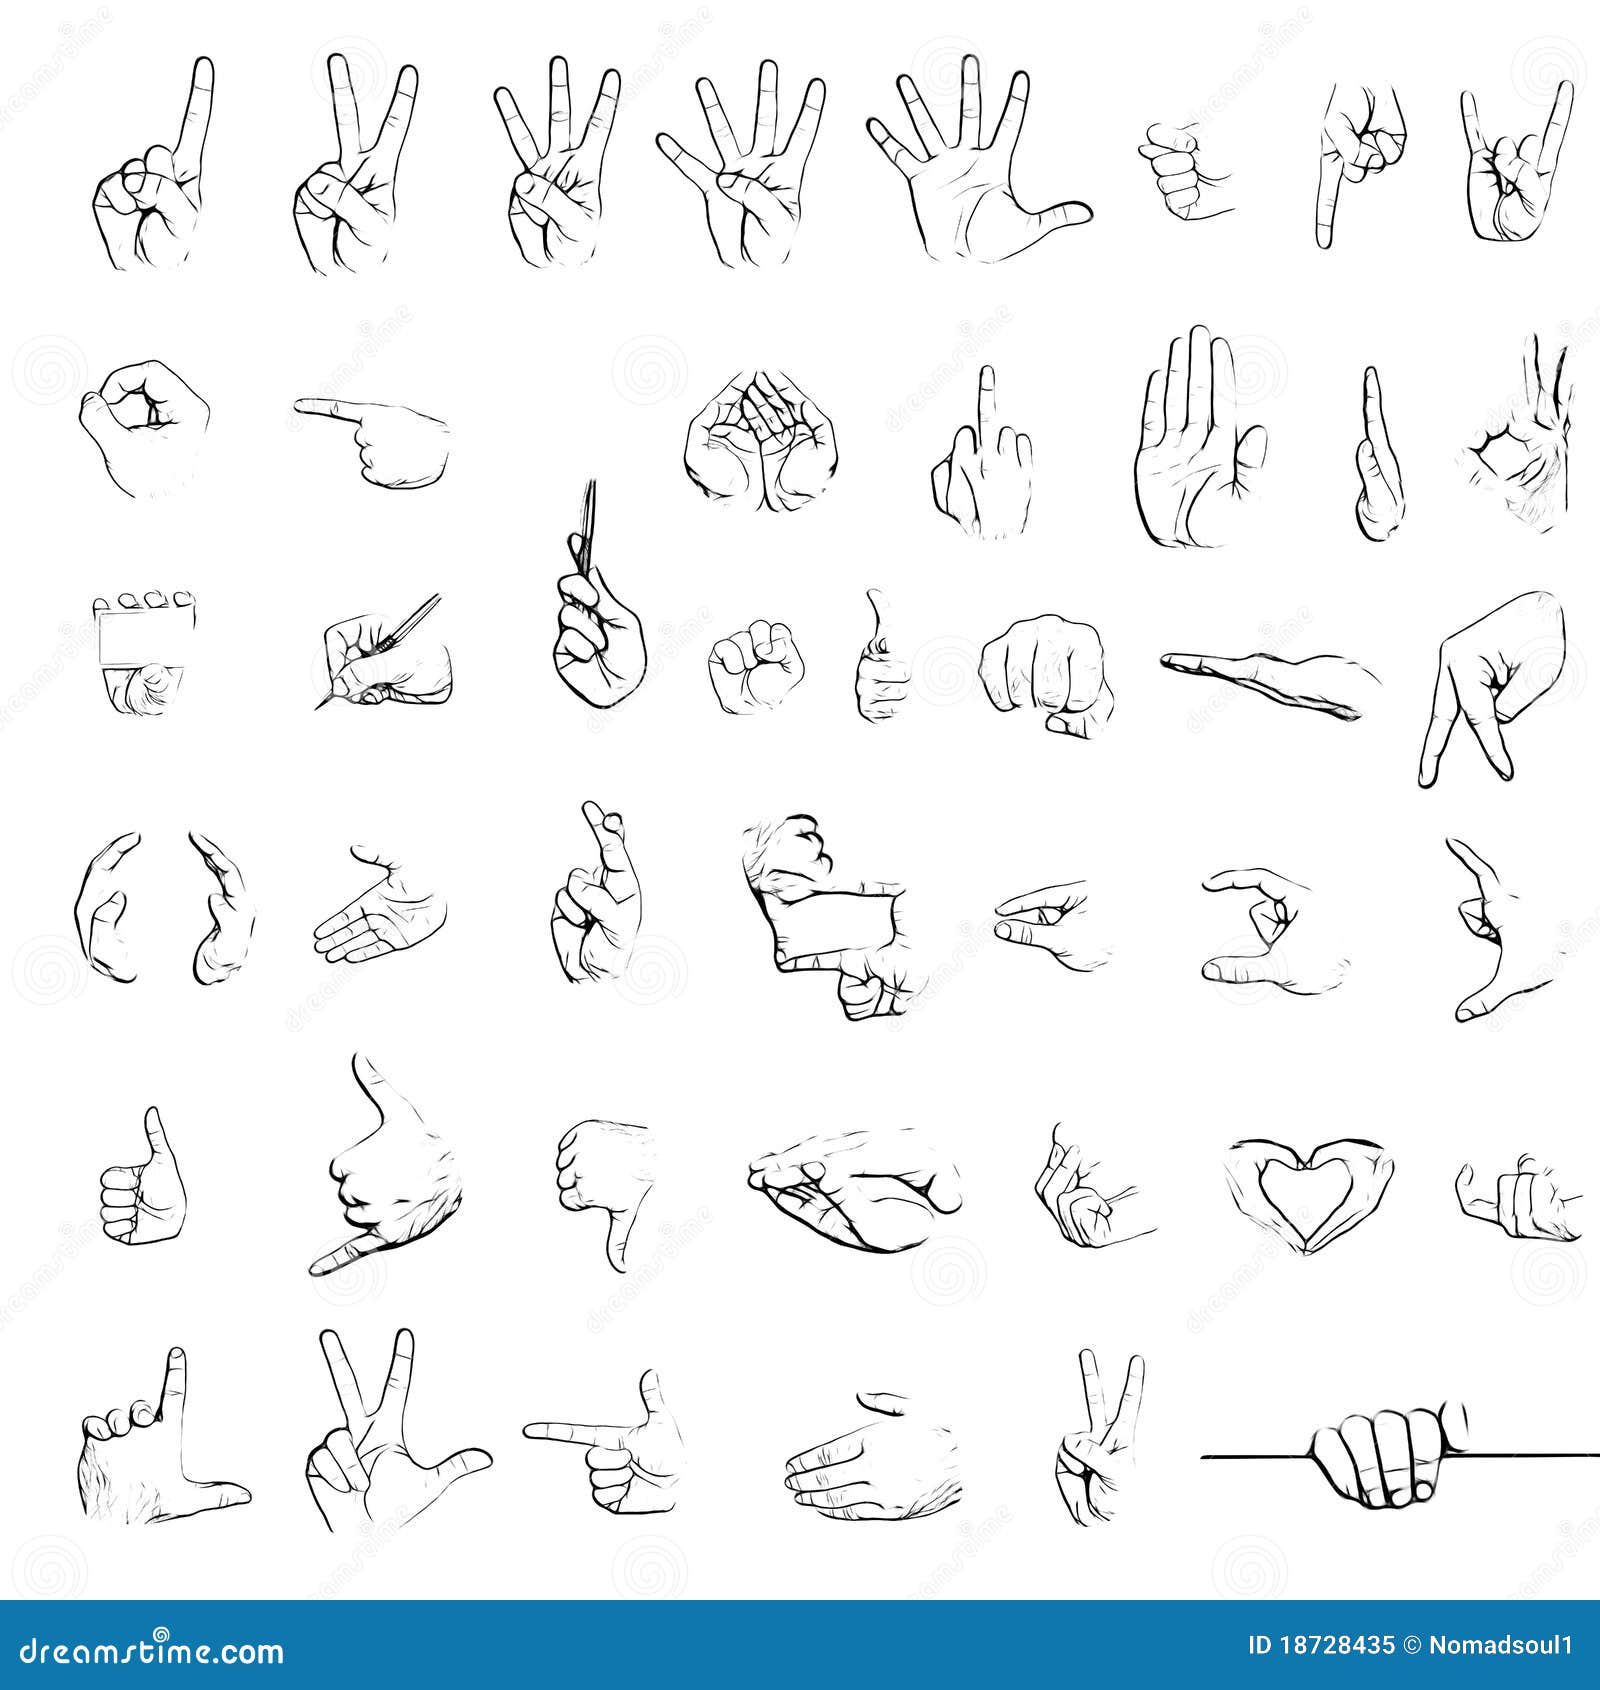 Gang Hand Signs Chart